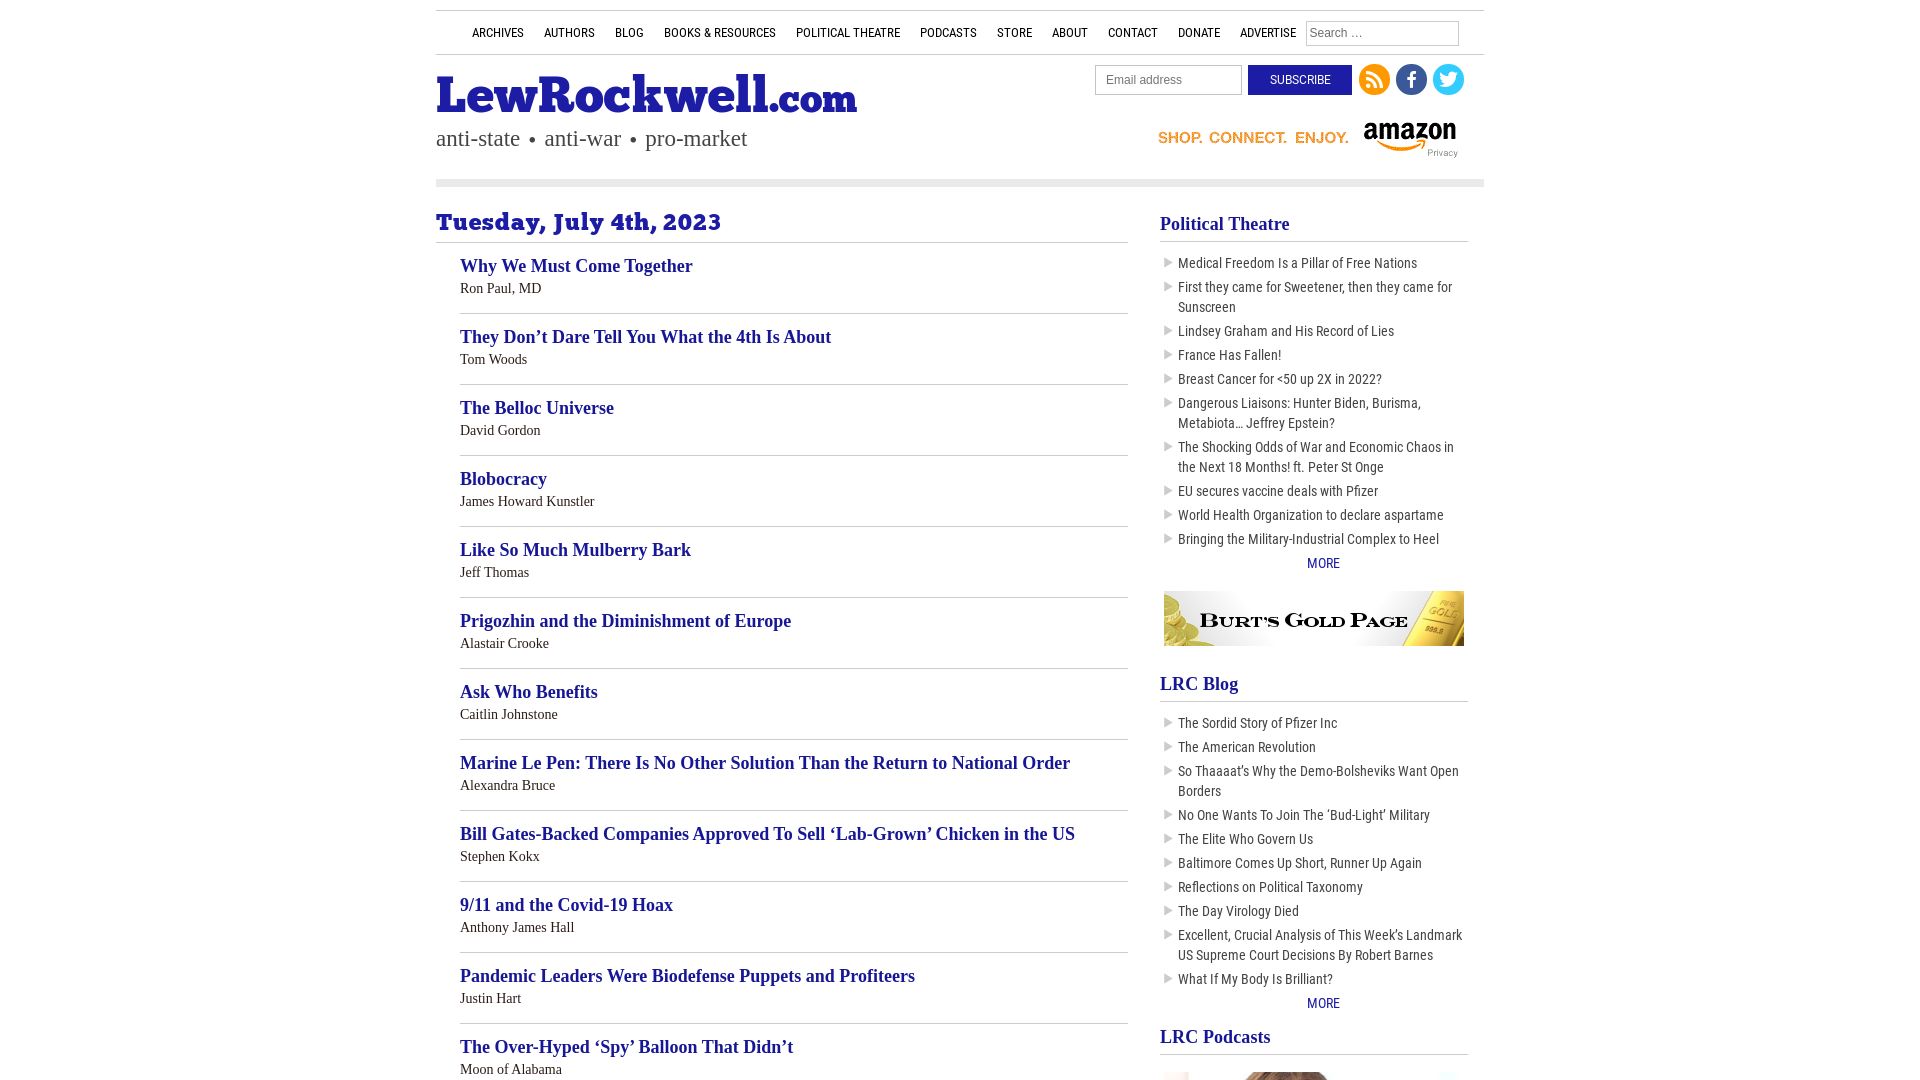 Website status lewrockwell.com is   ONLINE